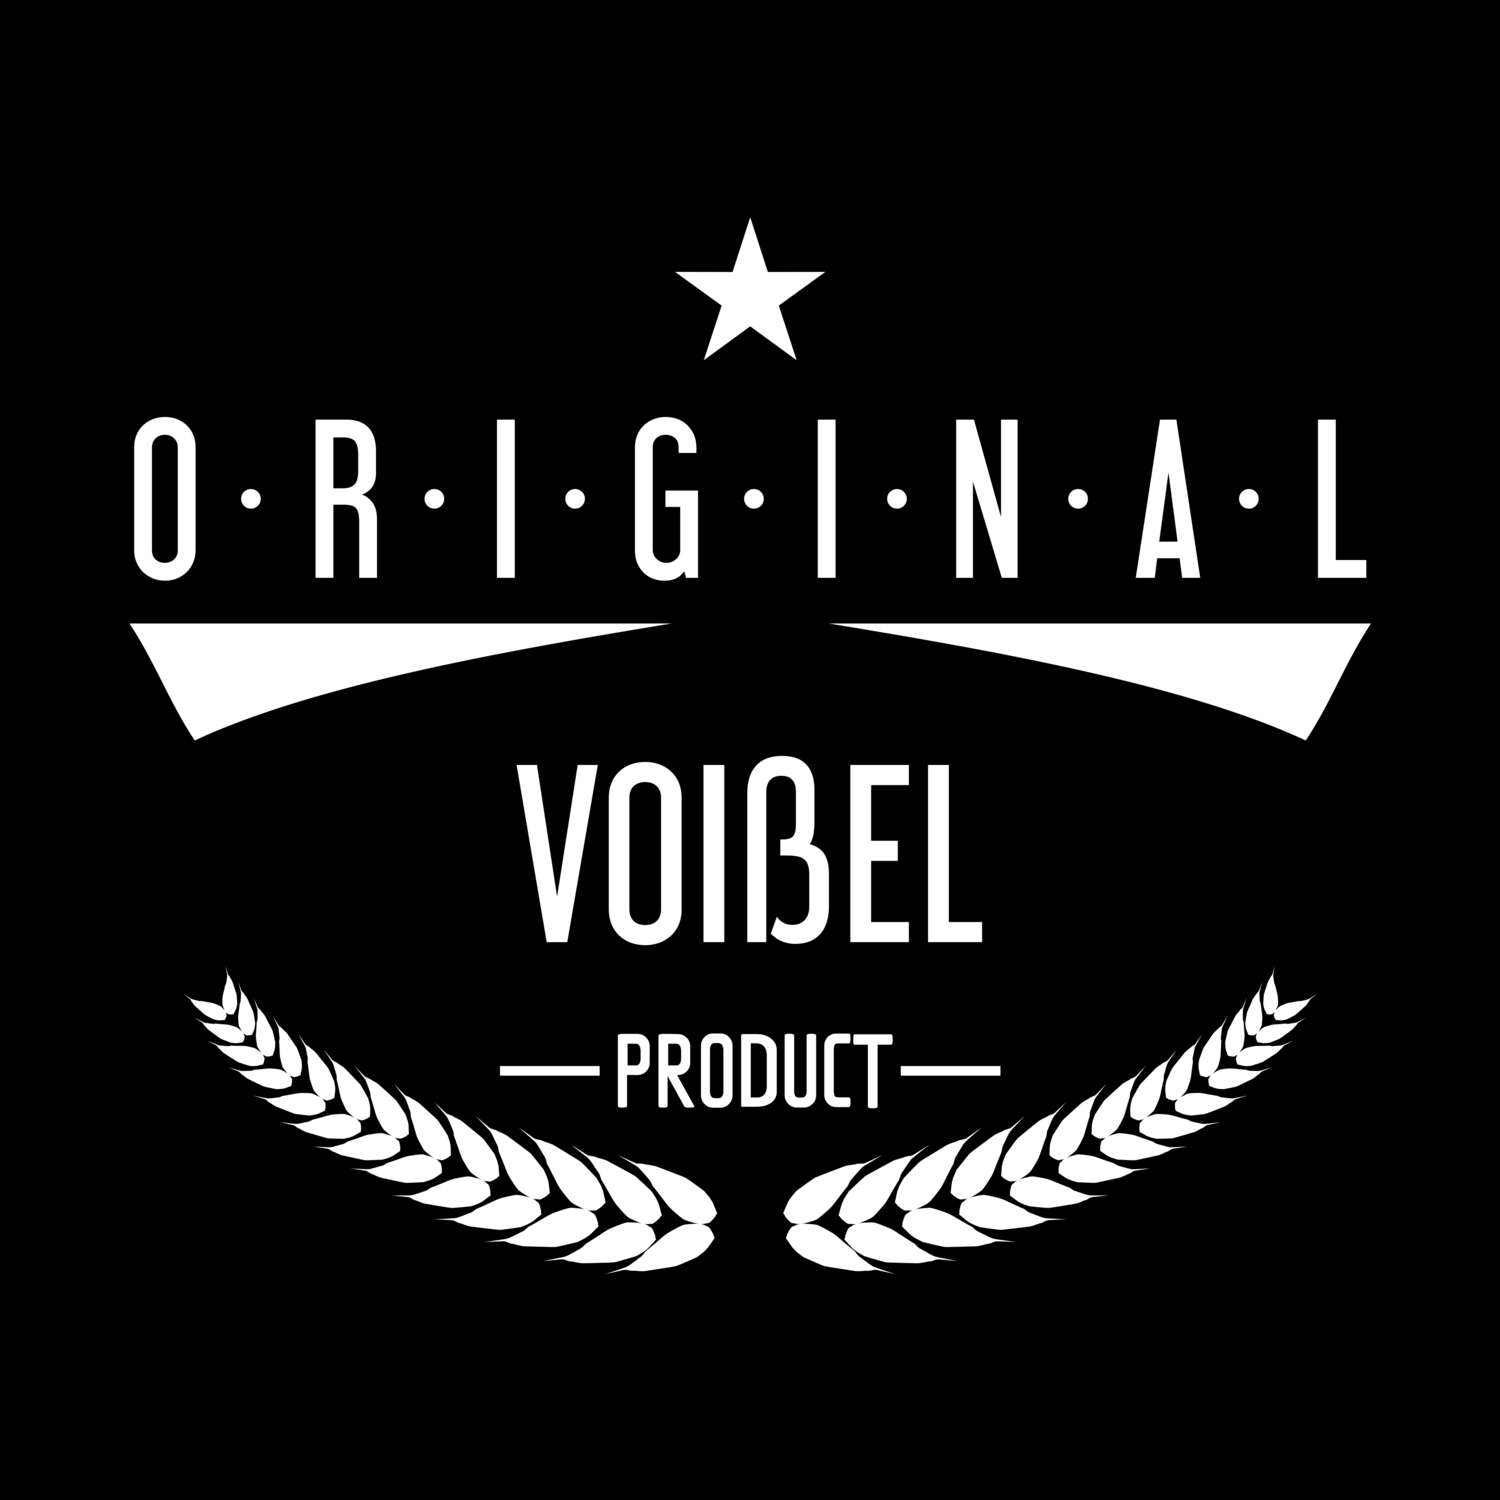 Voißel T-Shirt »Original Product«